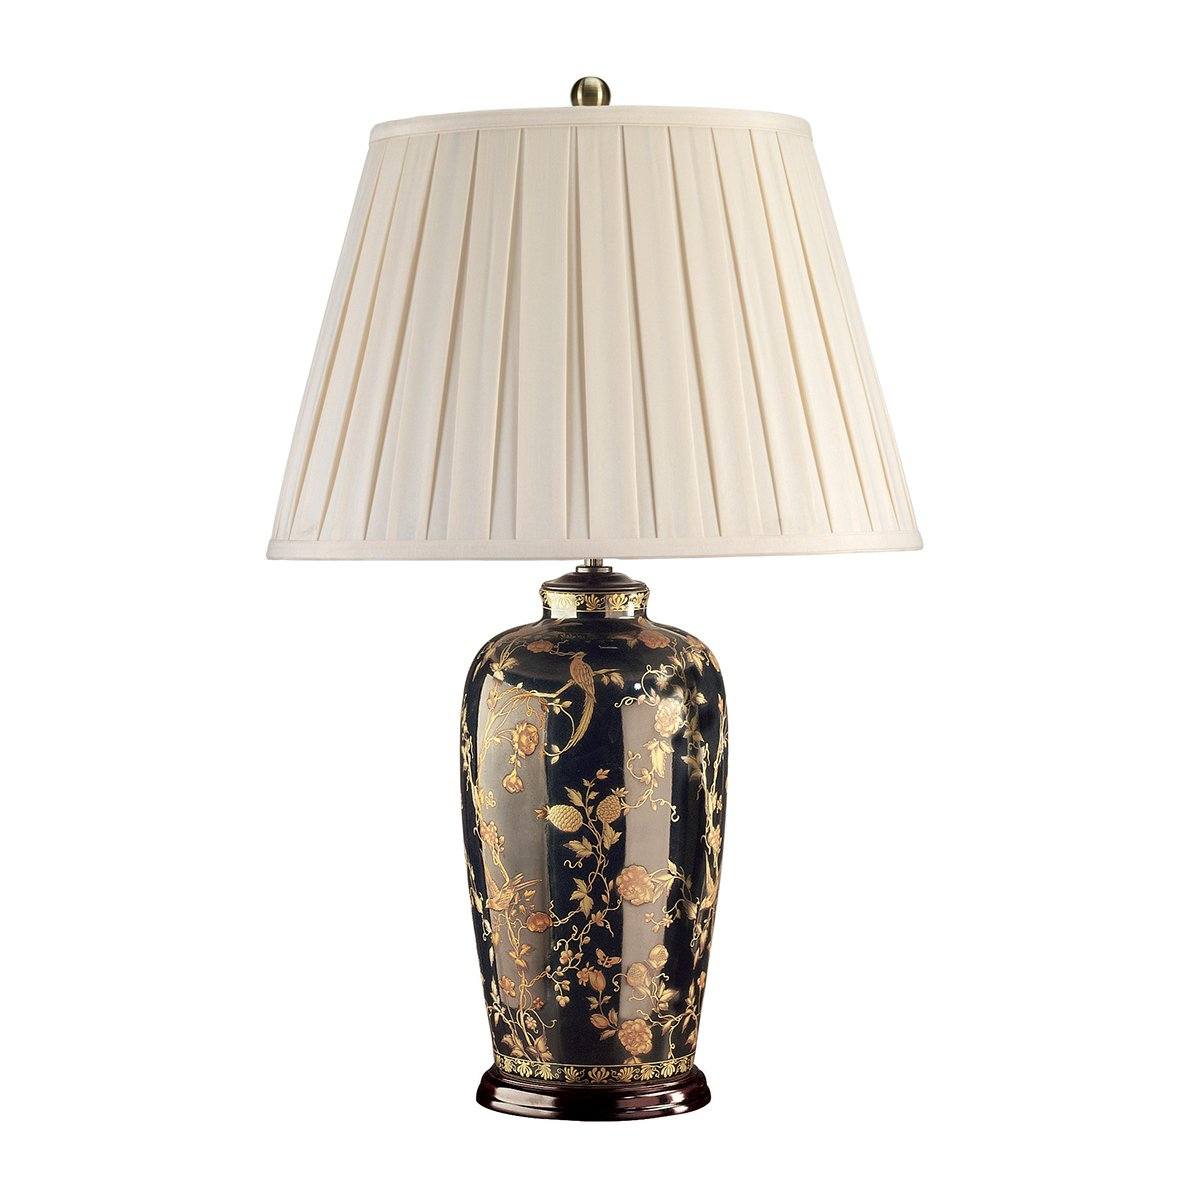 Blackfen Traditional Table Lamp c/w Shade - ID 8286